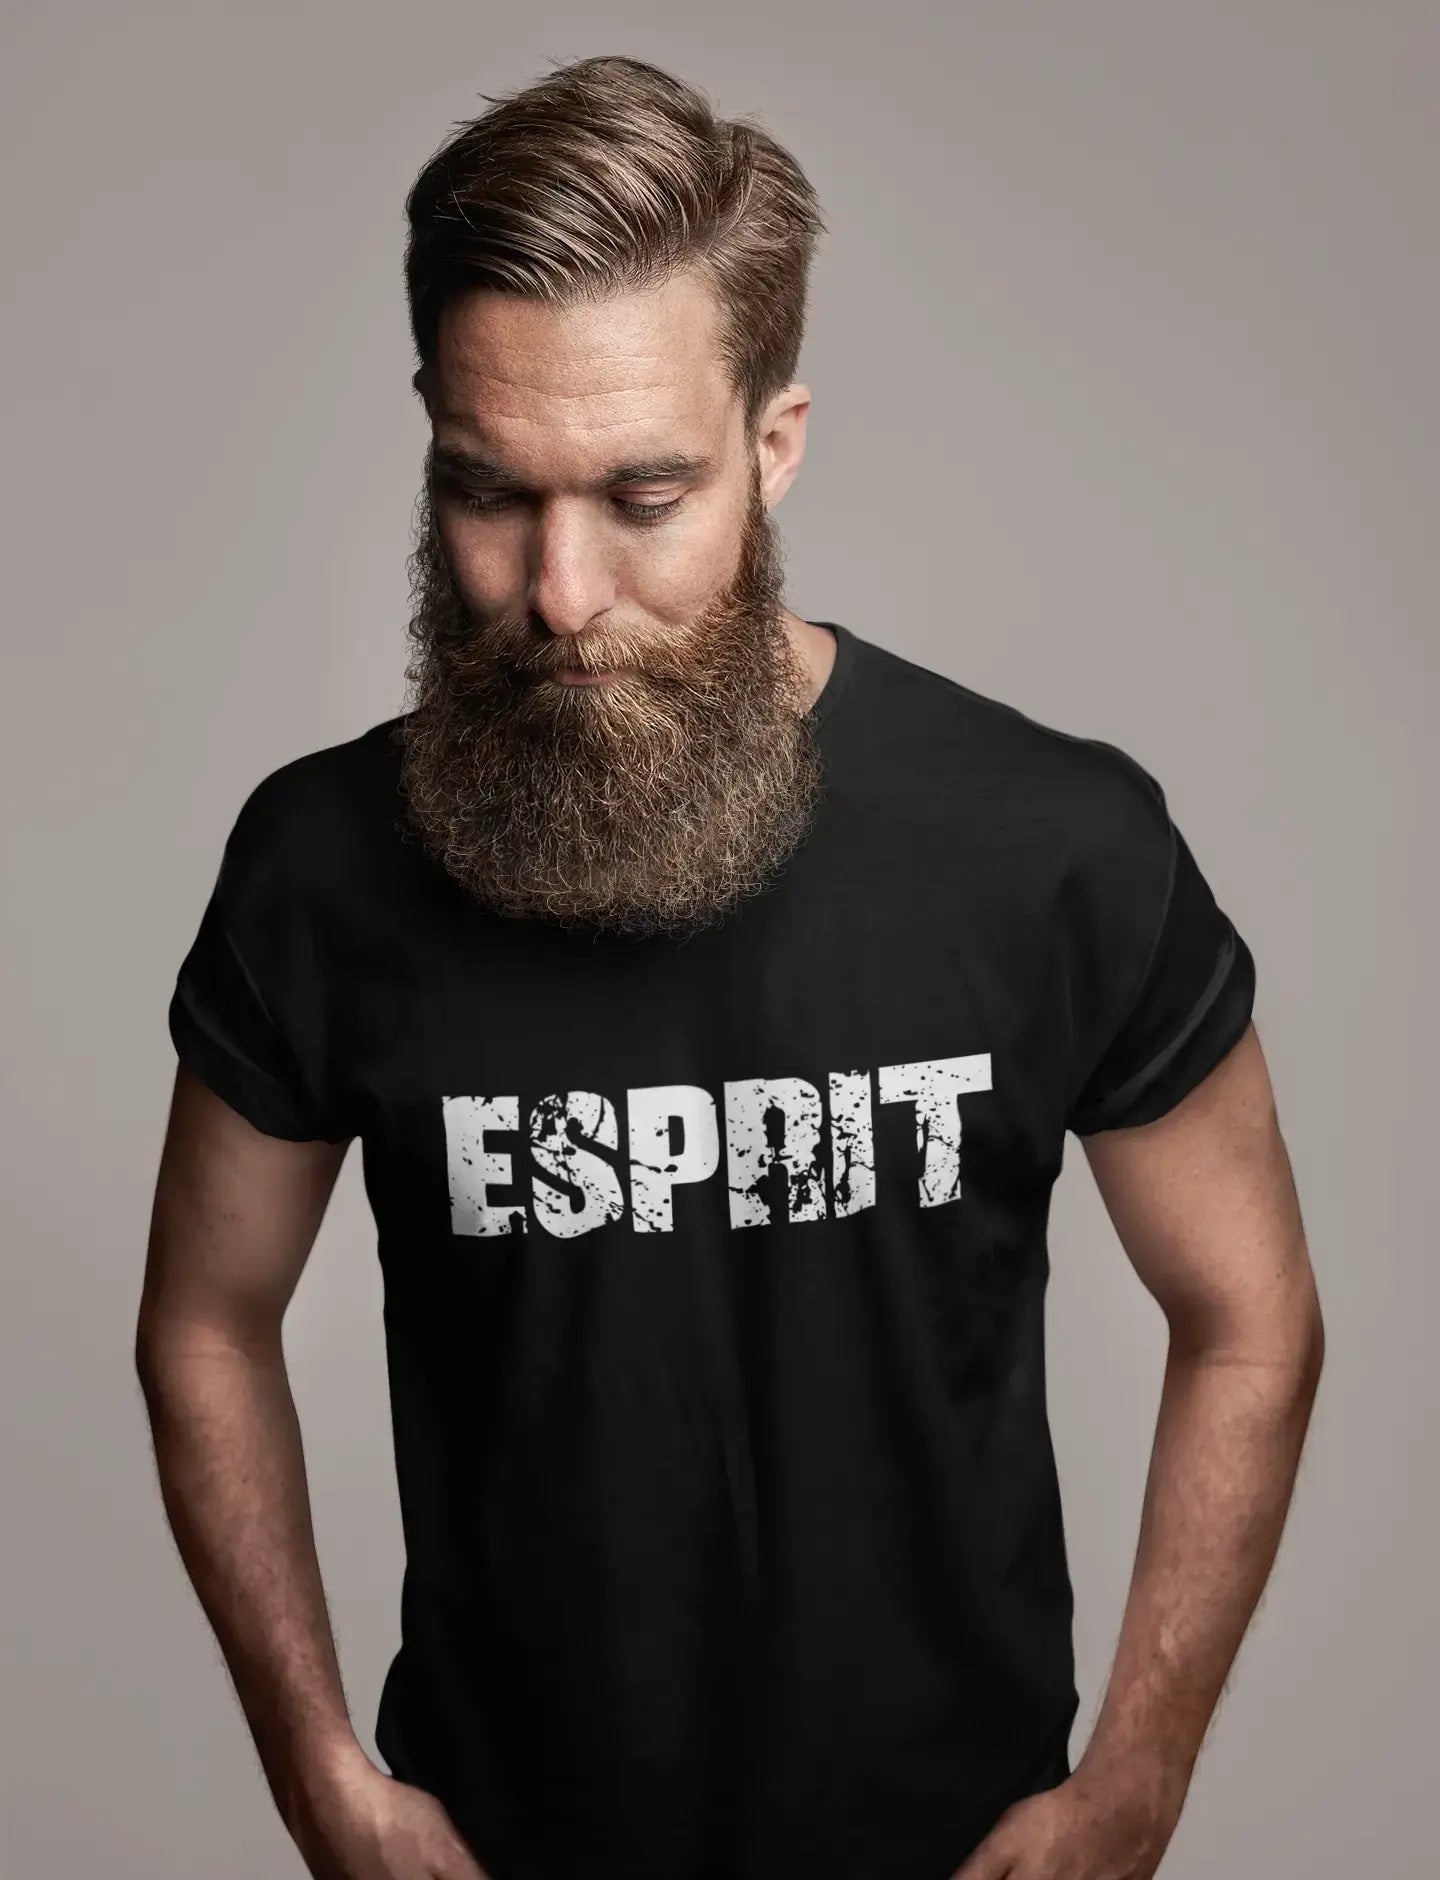 esprit Men's Retro T shirt Black Birthday Gift